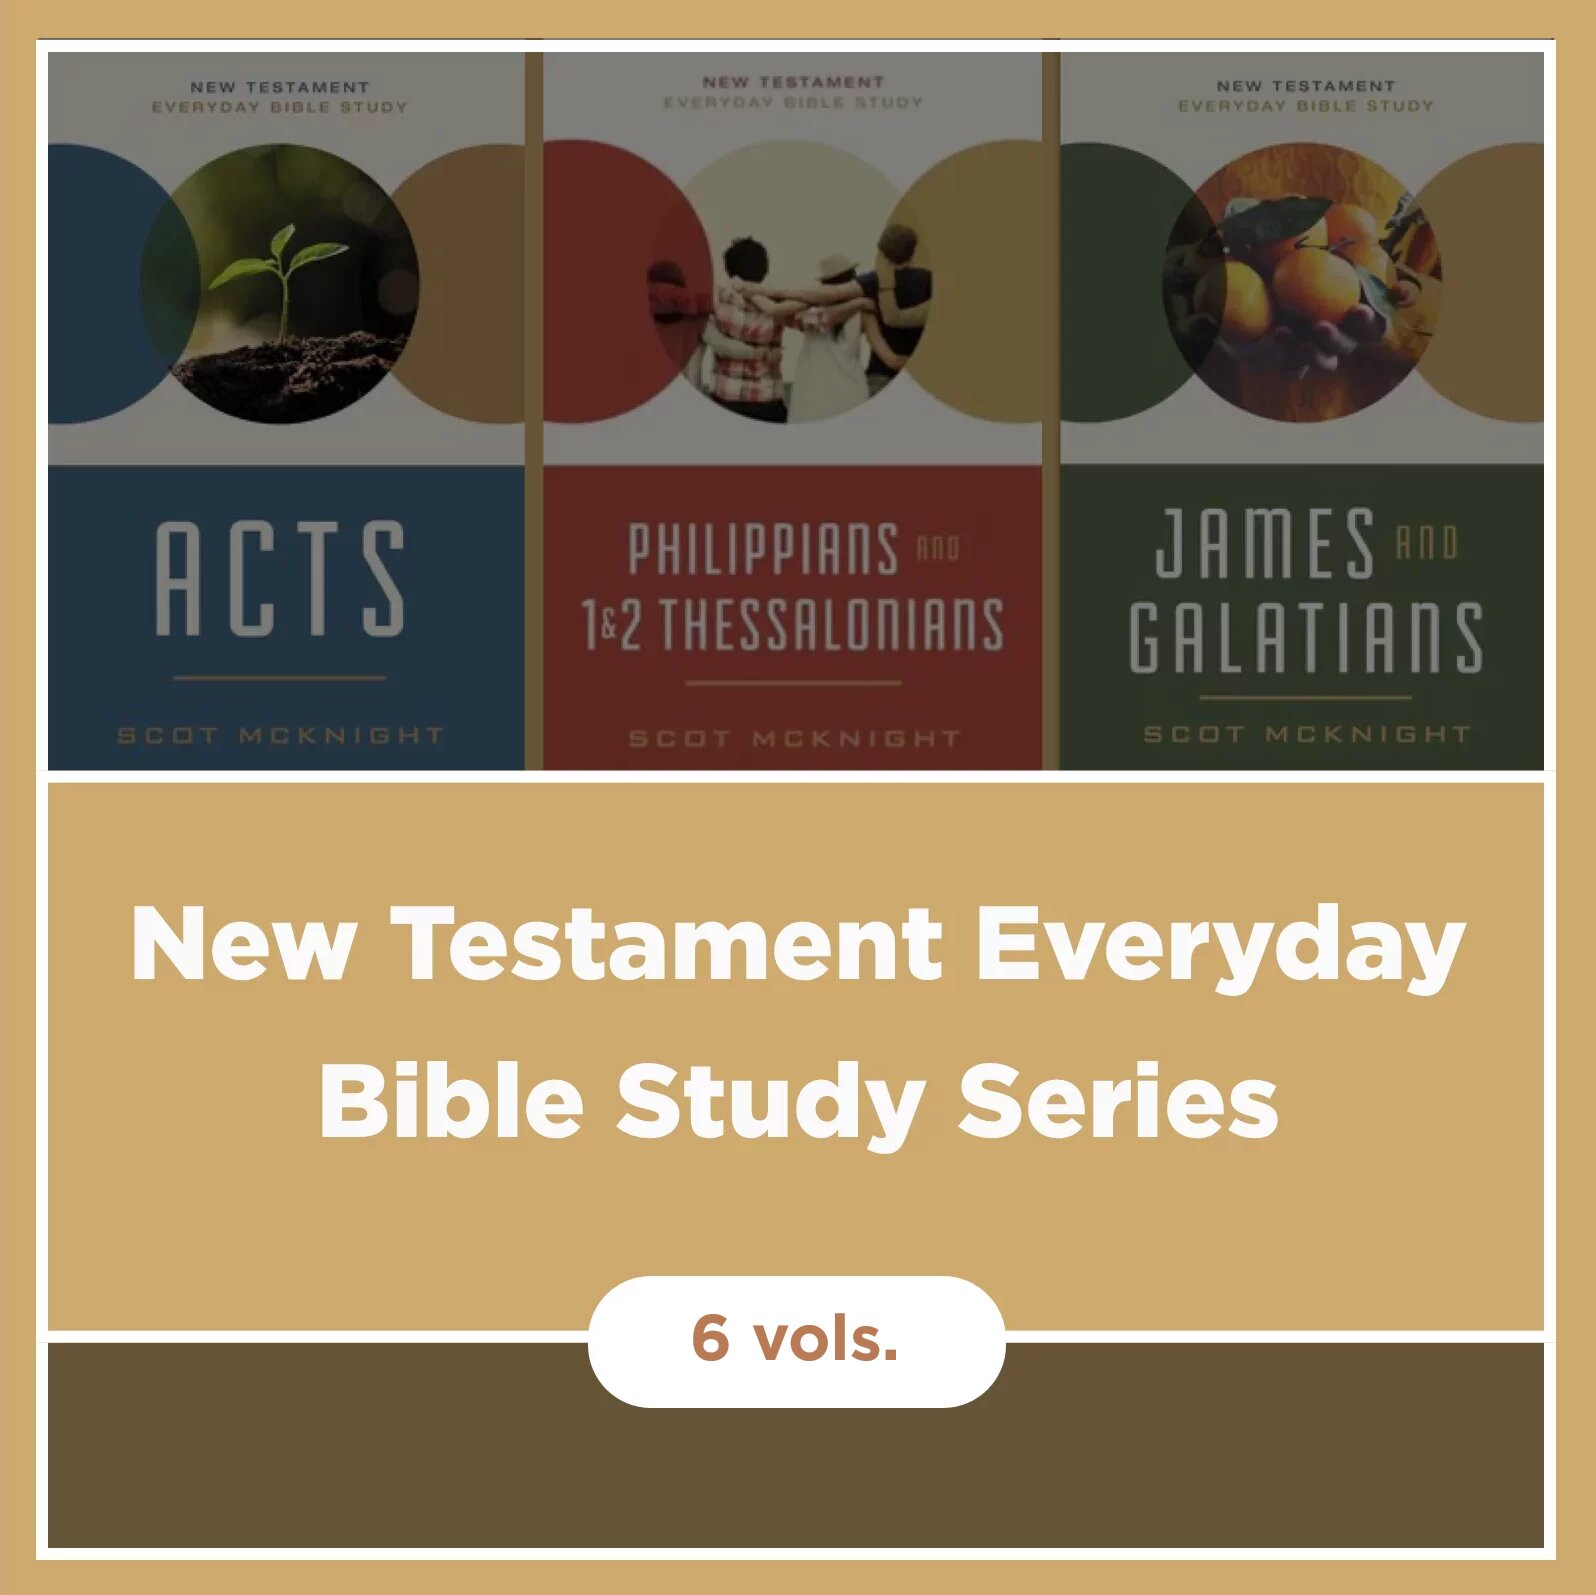 New Testament Everyday Bible Study Series (6 vols.)